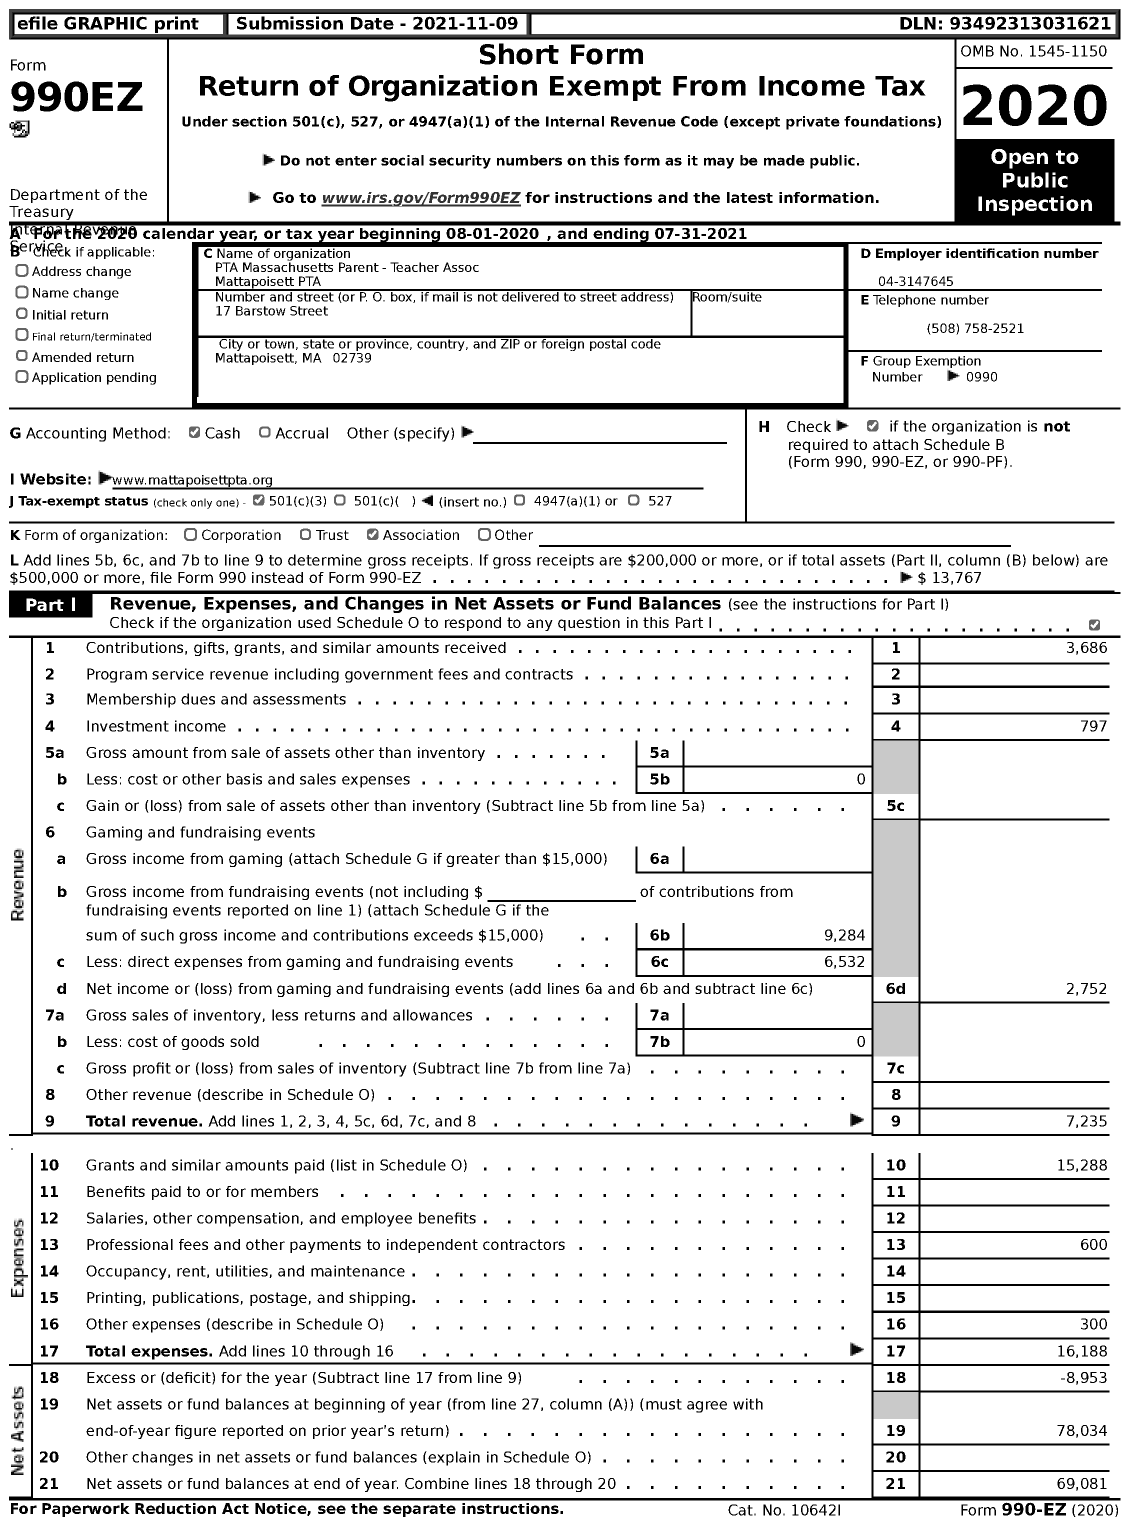 Image of first page of 2020 Form 990EZ for PTA Massachusetts Parent - Teacher Assoc Mattapoisett PTA